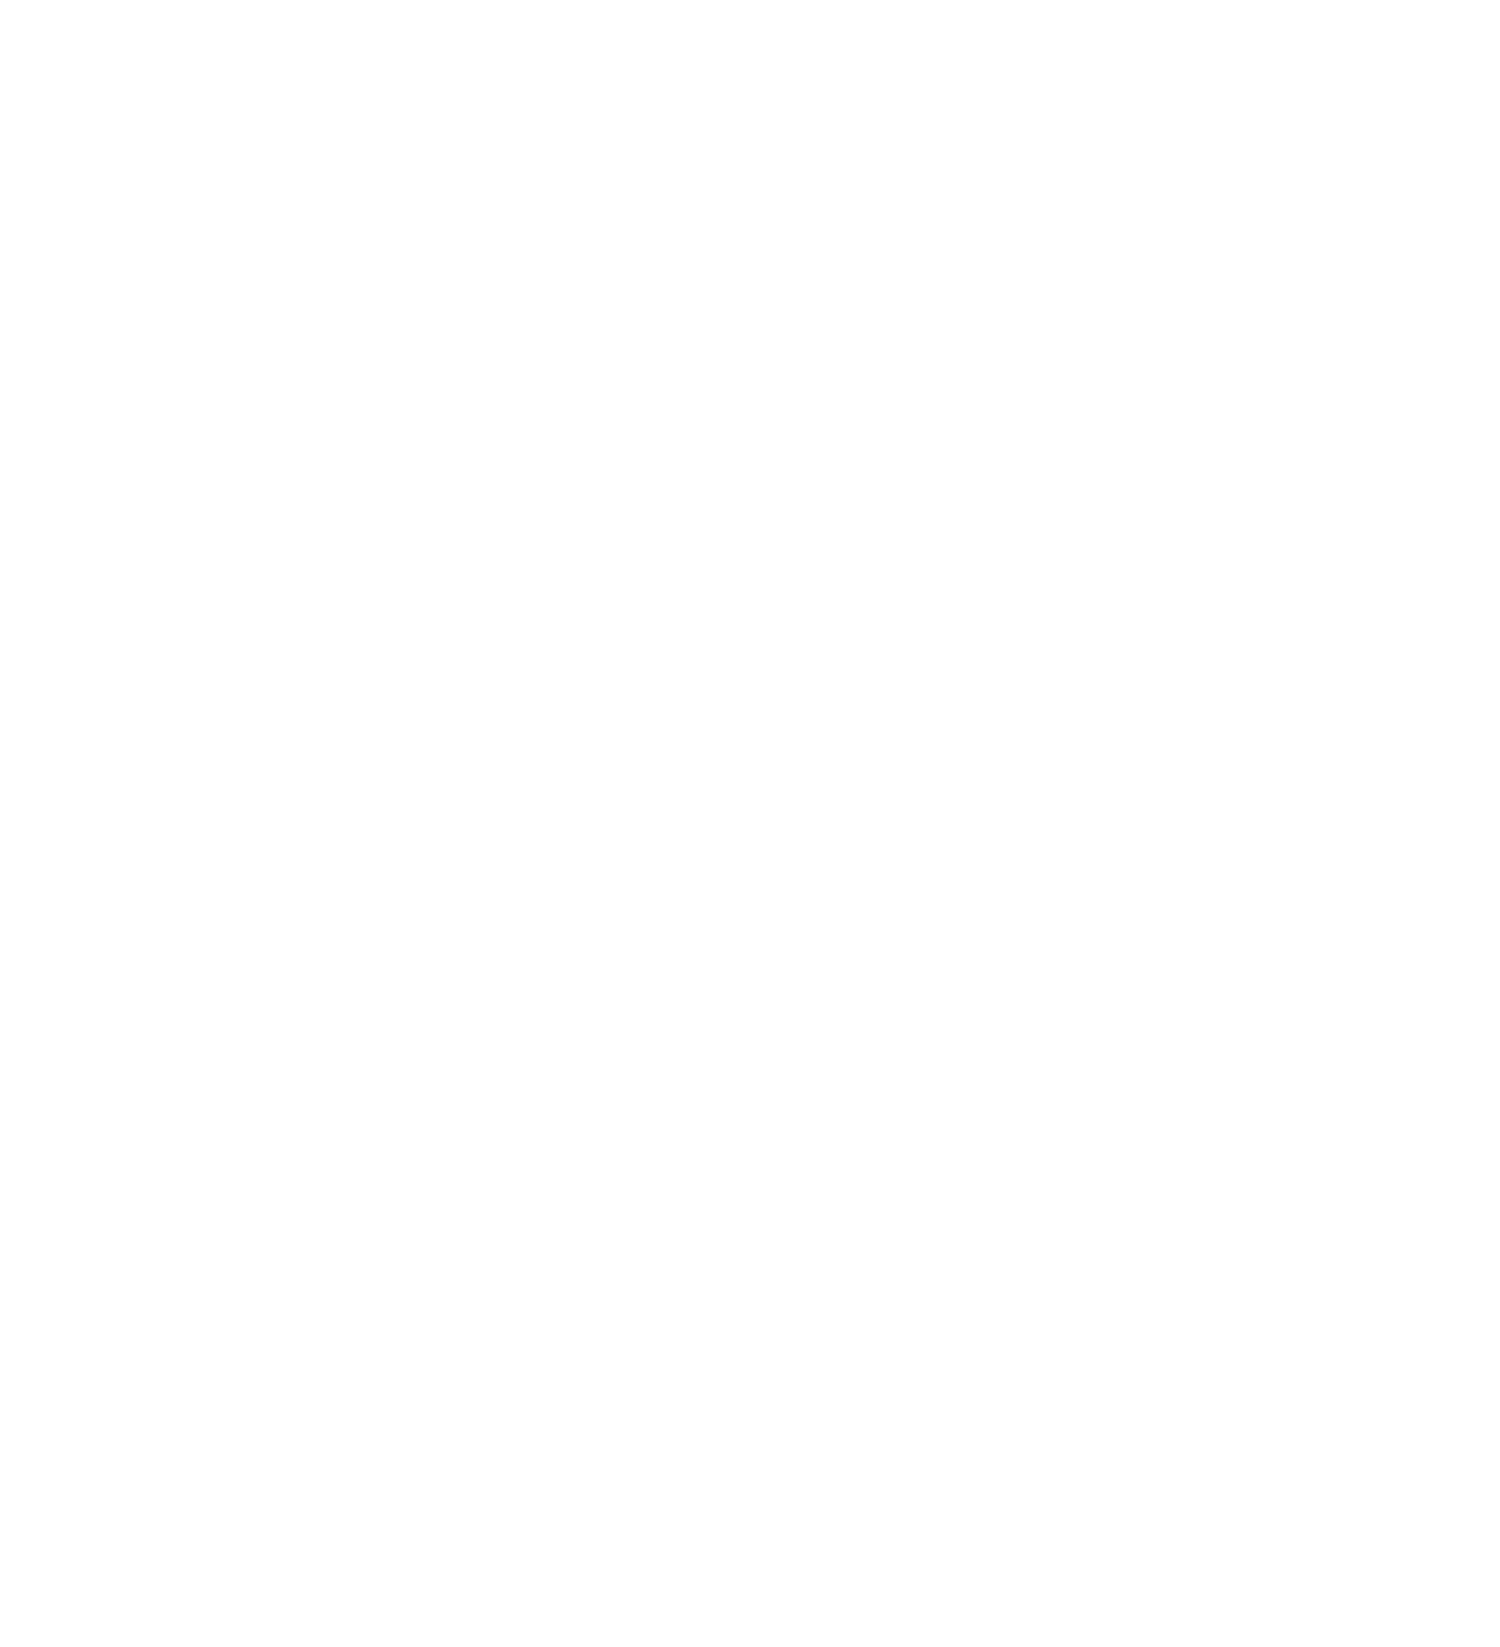 Taiko Community Alliance